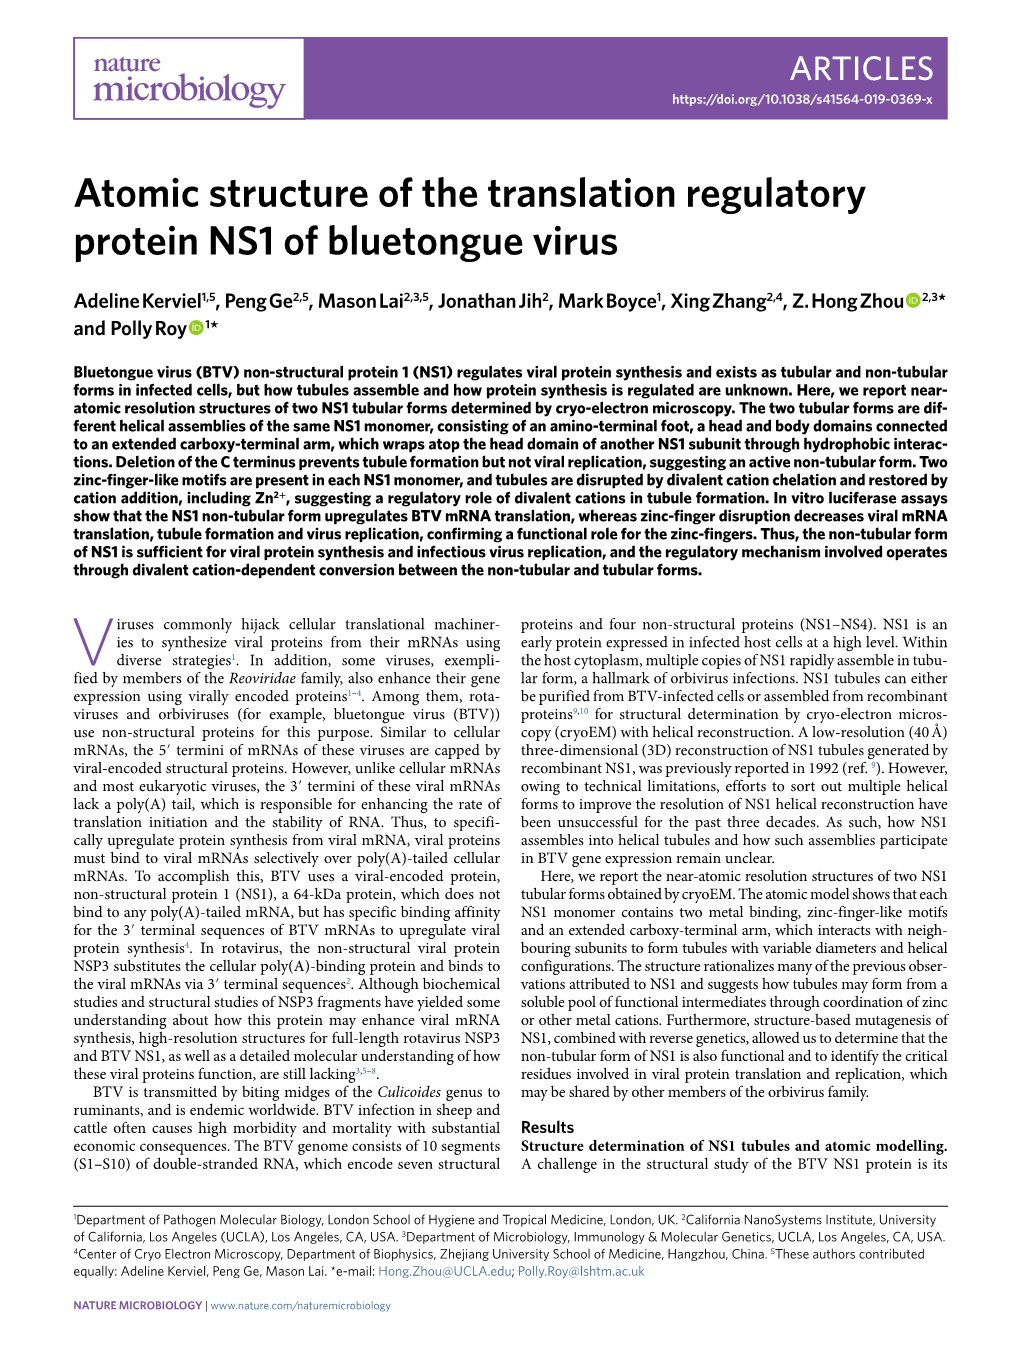 Atomic Structure of the Translation Regulatory Protein NS1 of Bluetongue Virus